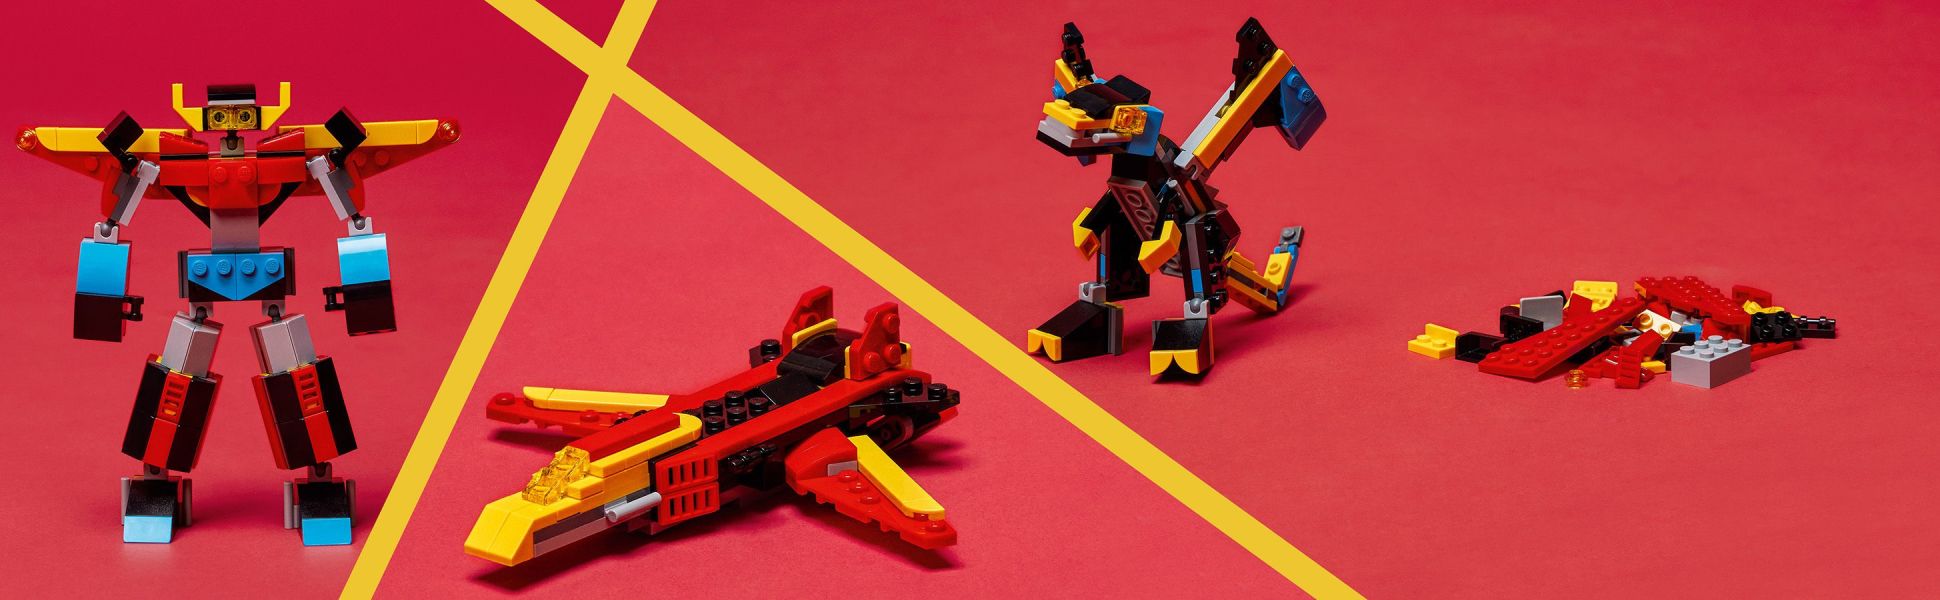 LEGO Creator 3in1 Super Robot 31124 Building Kit (159 Pieces